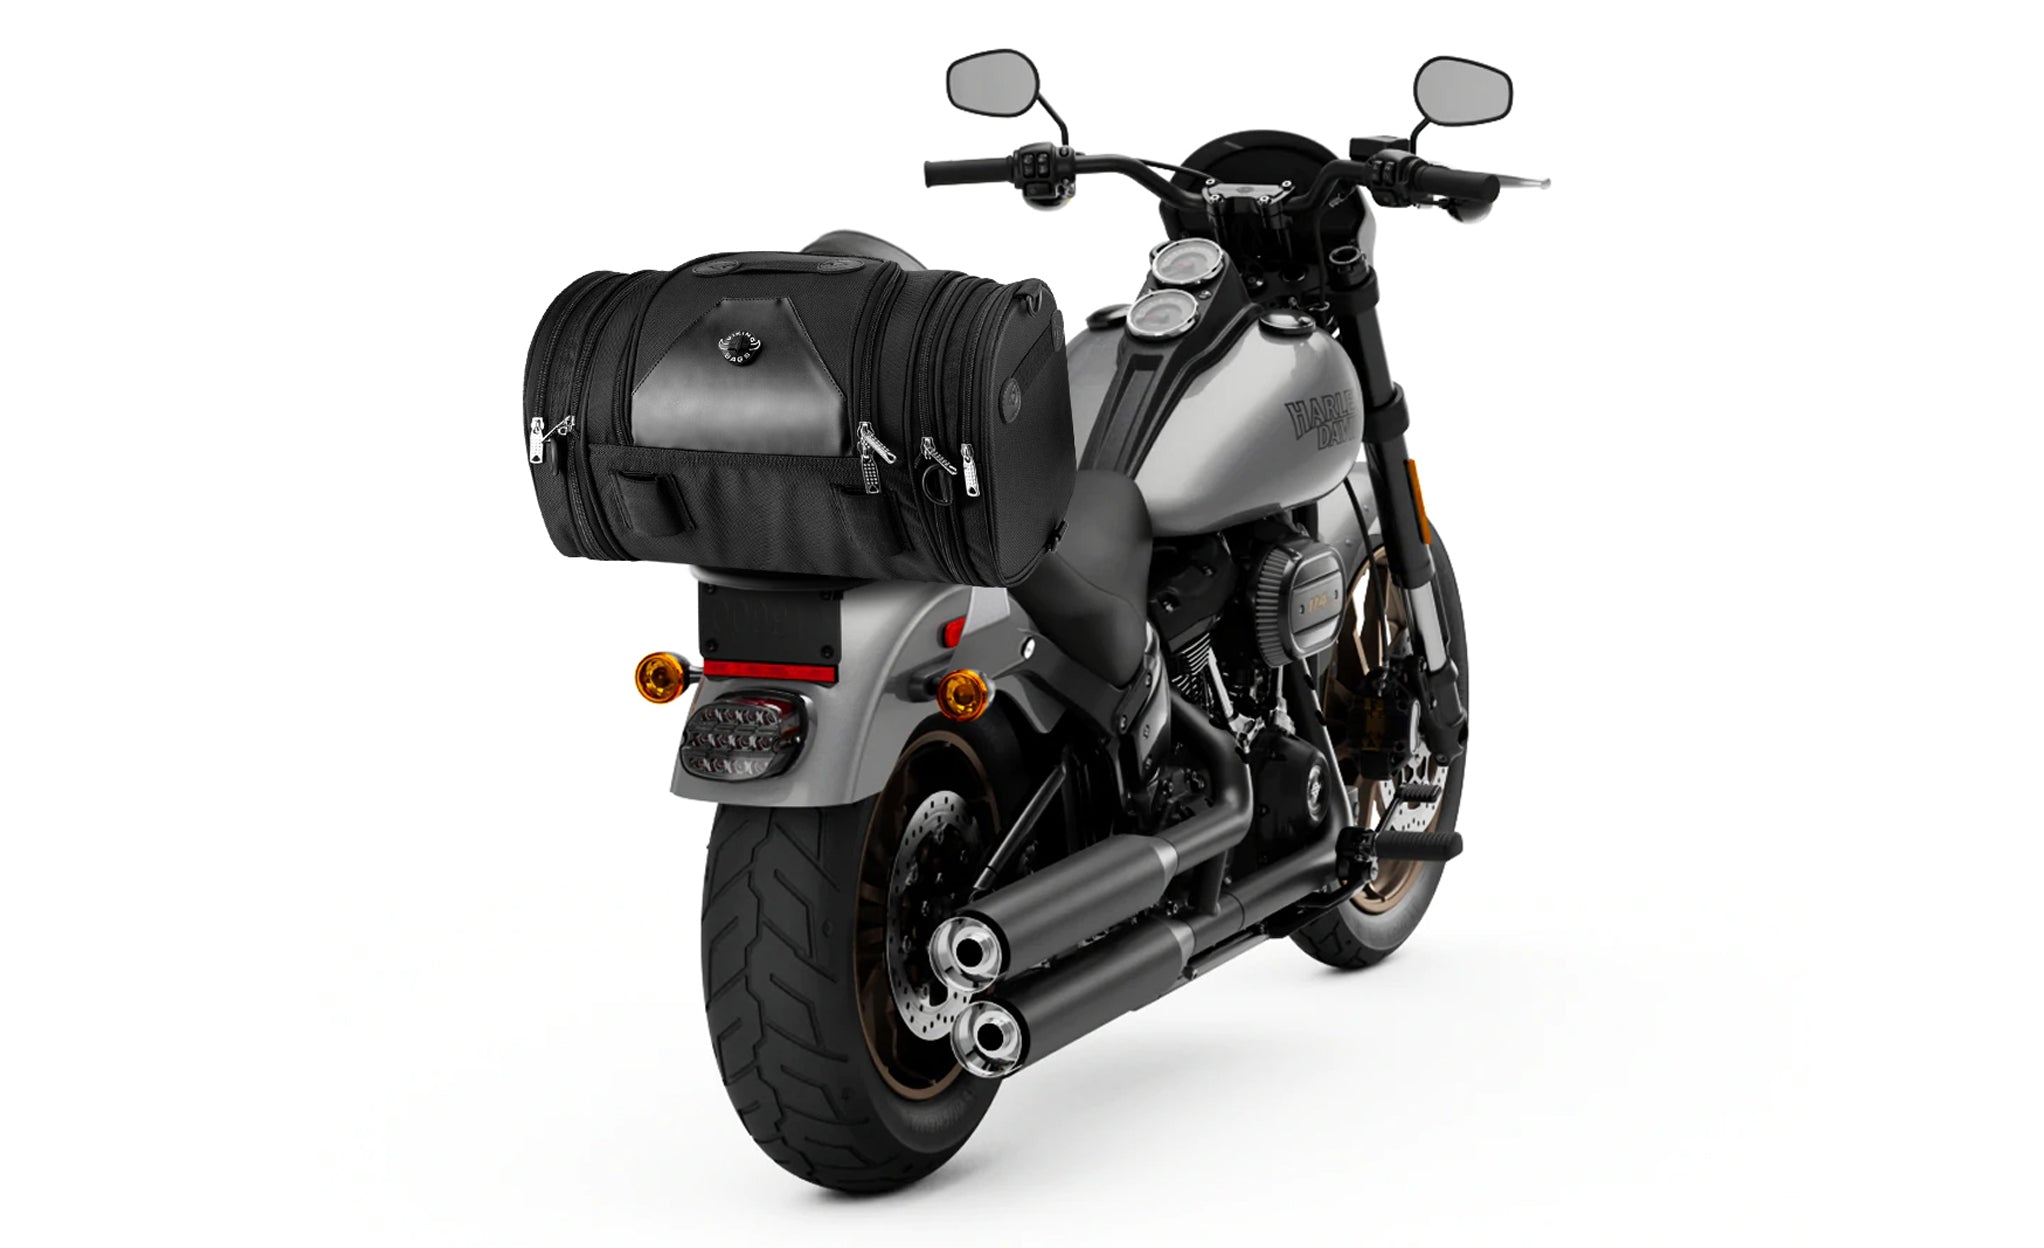 Viking Axwell Small Triumph Motorcycle Sissy Bar Bag Bag on Bike View @expand